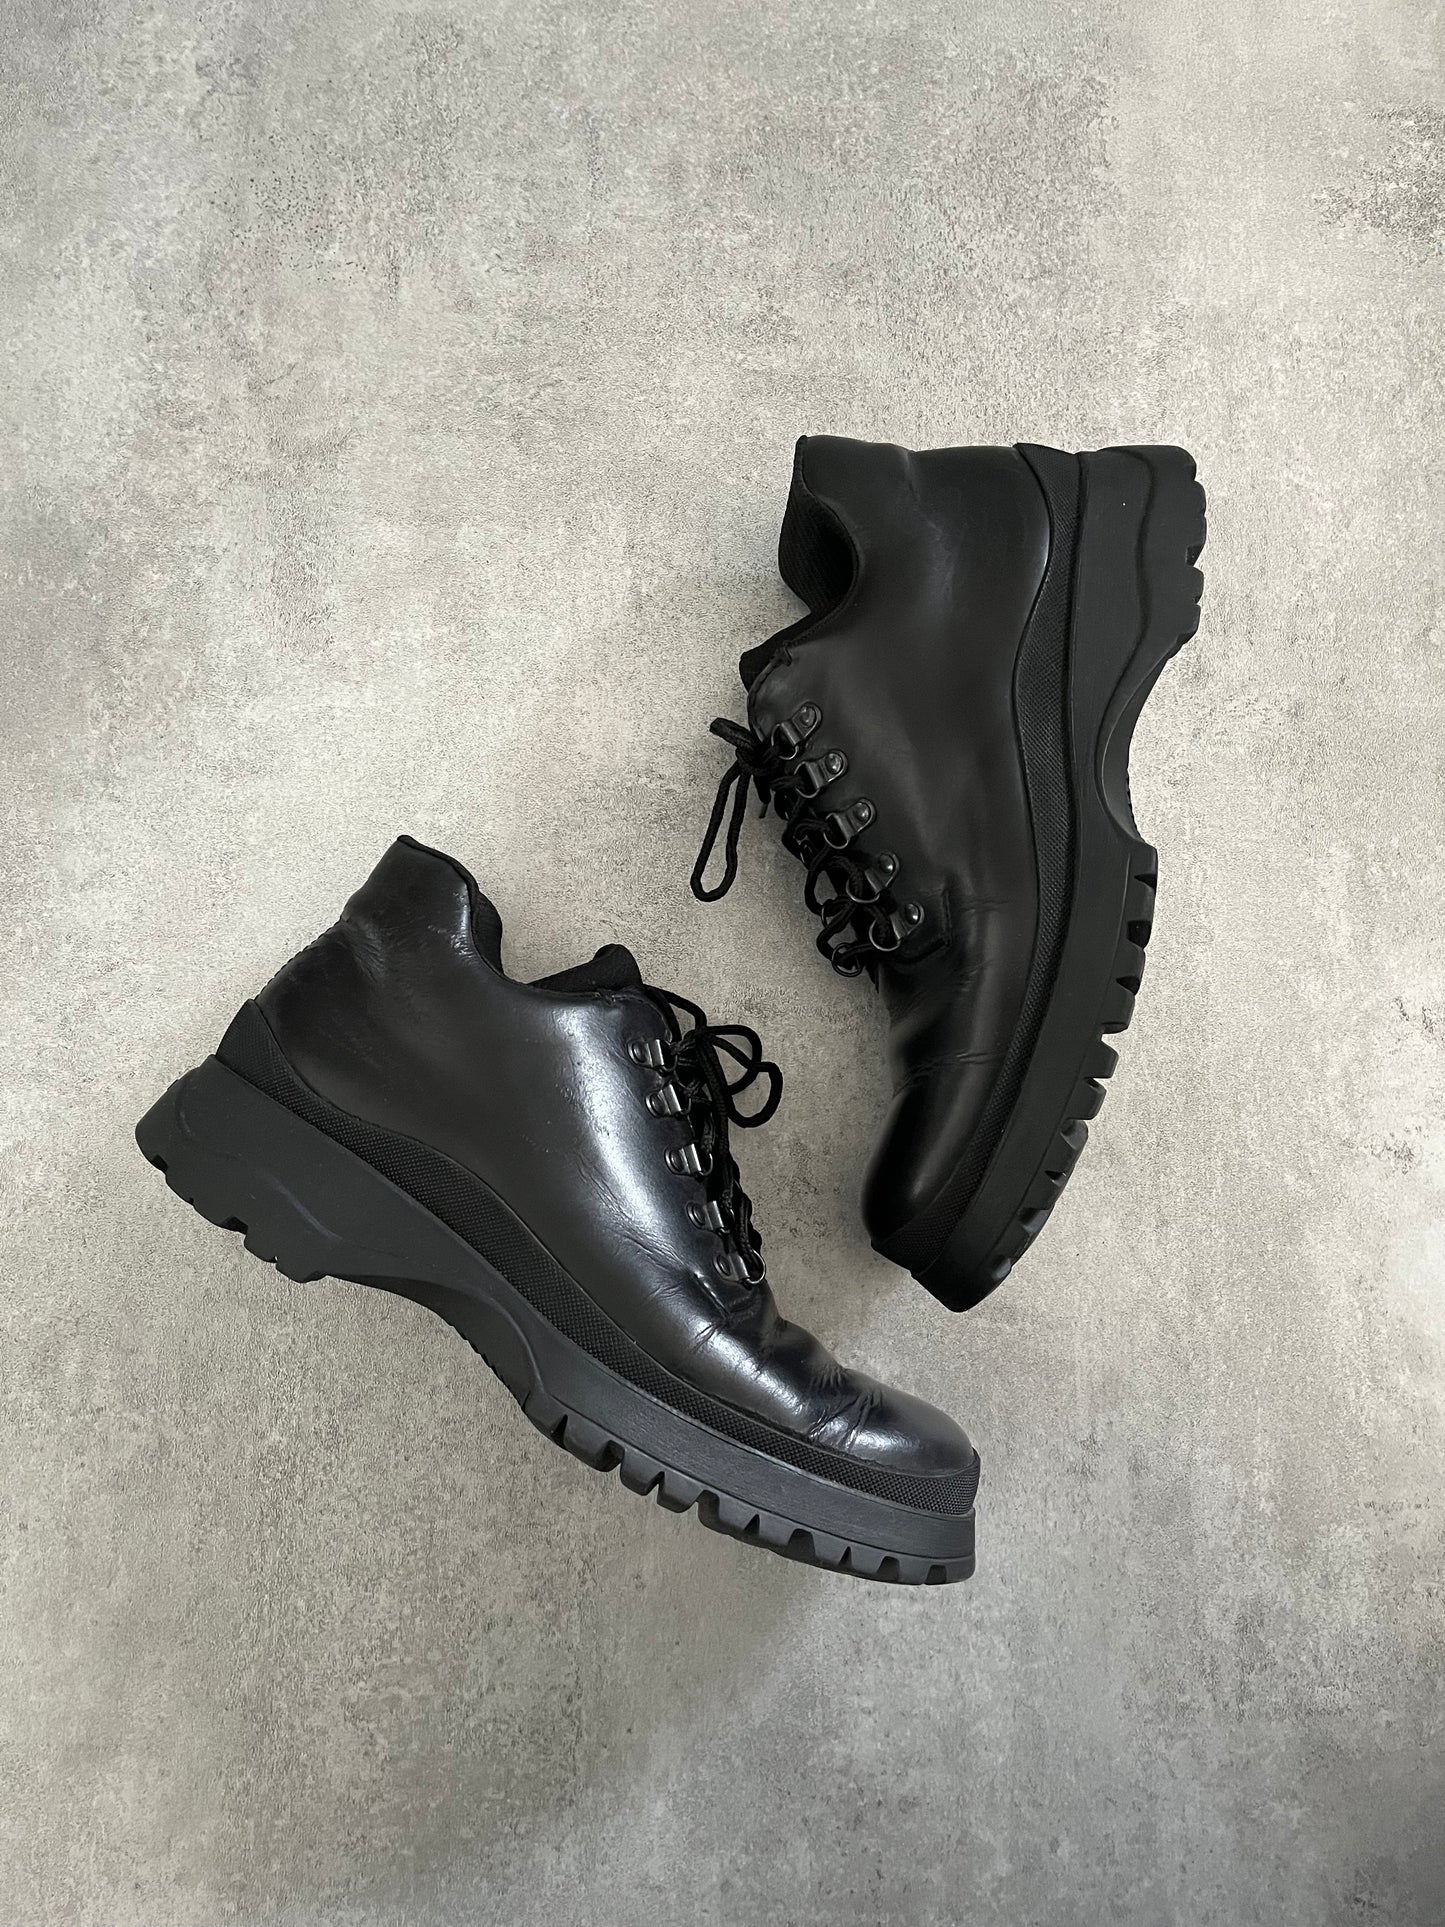 AW1999 Prada Vibram Leather Boots (41) - 4